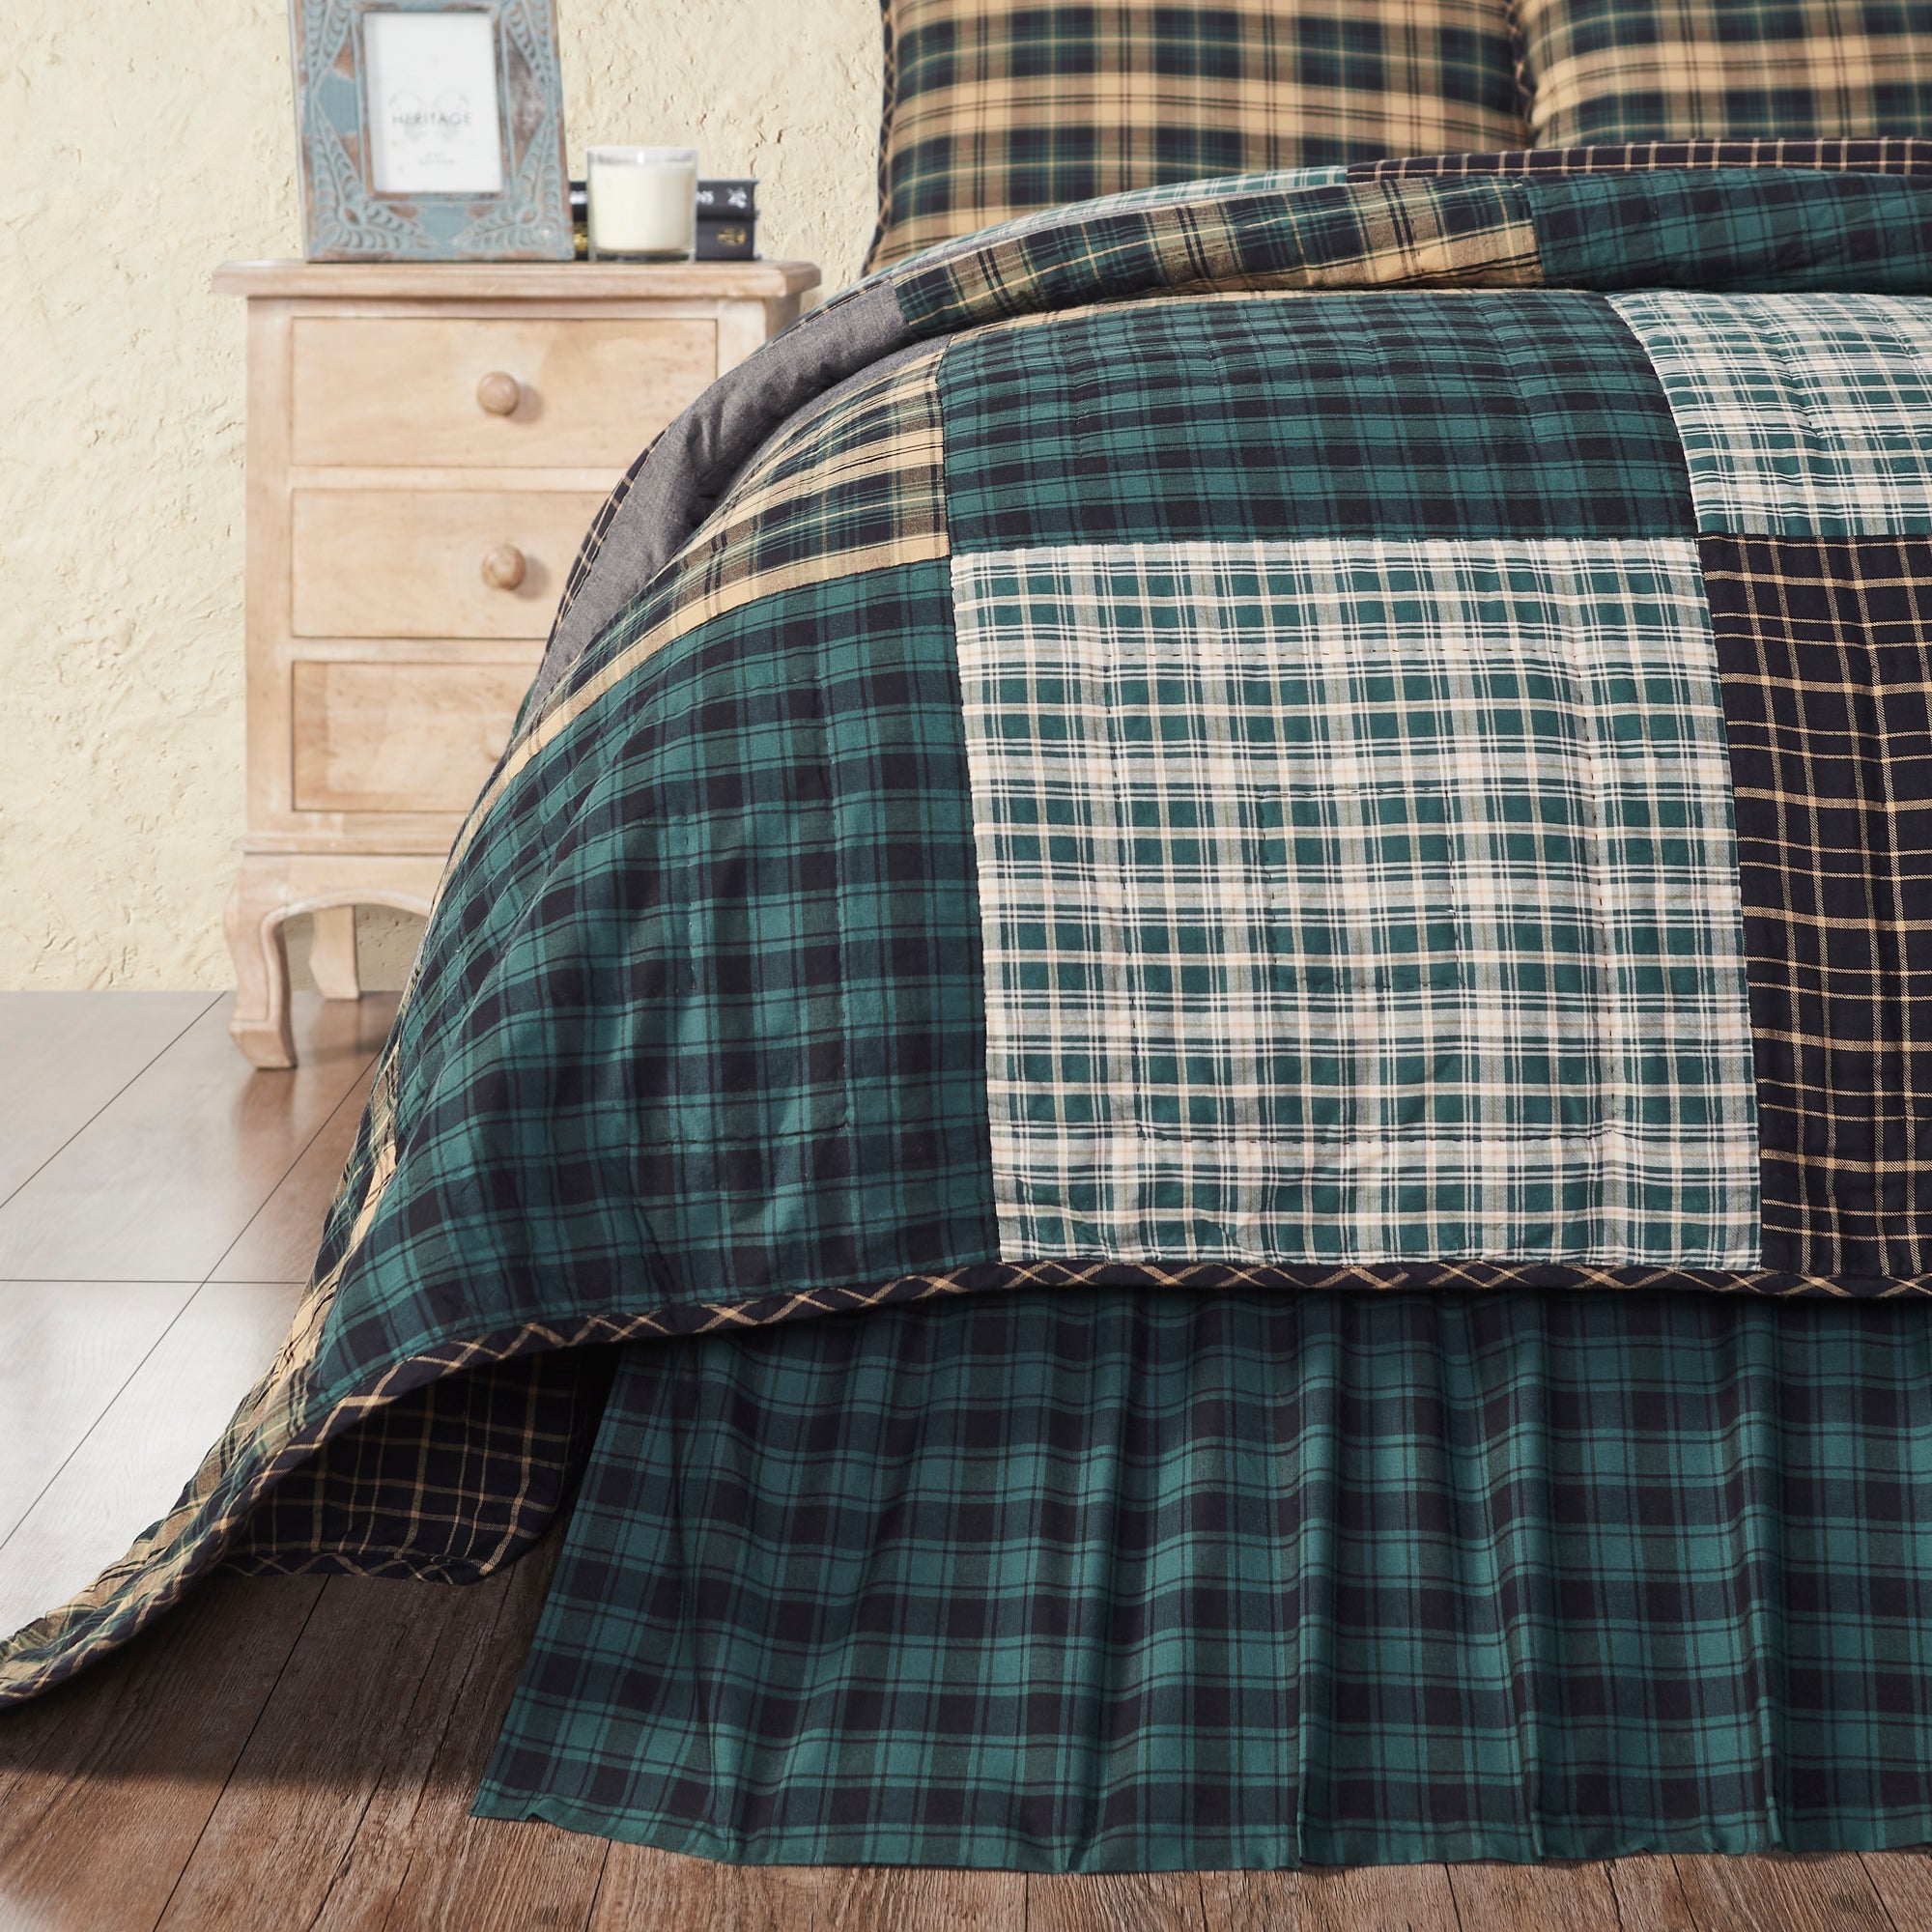 Pine Grove King Bed Skirt 78x80x16 VHC Brands